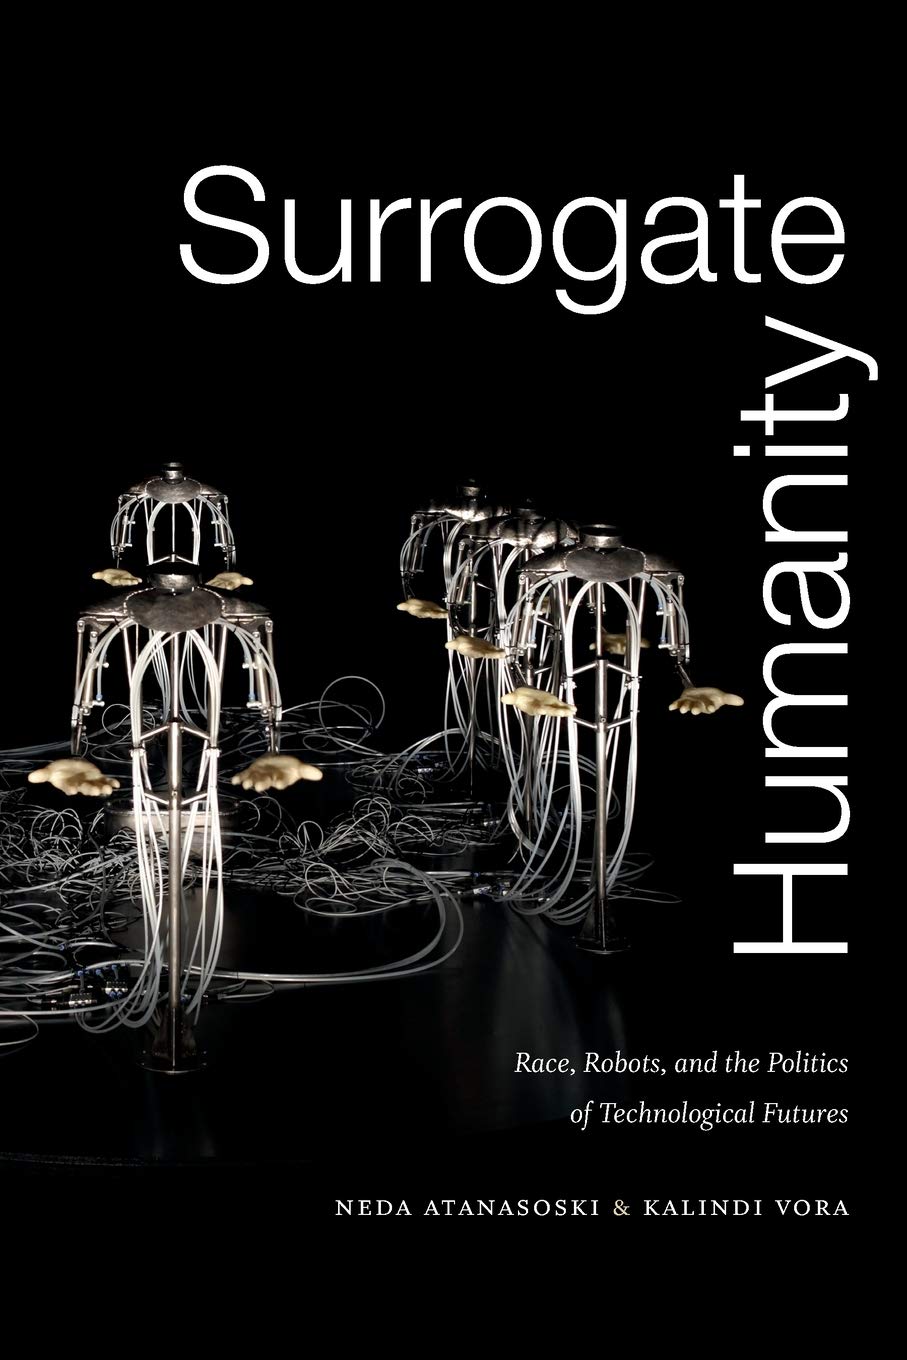 Surrogate Humanity